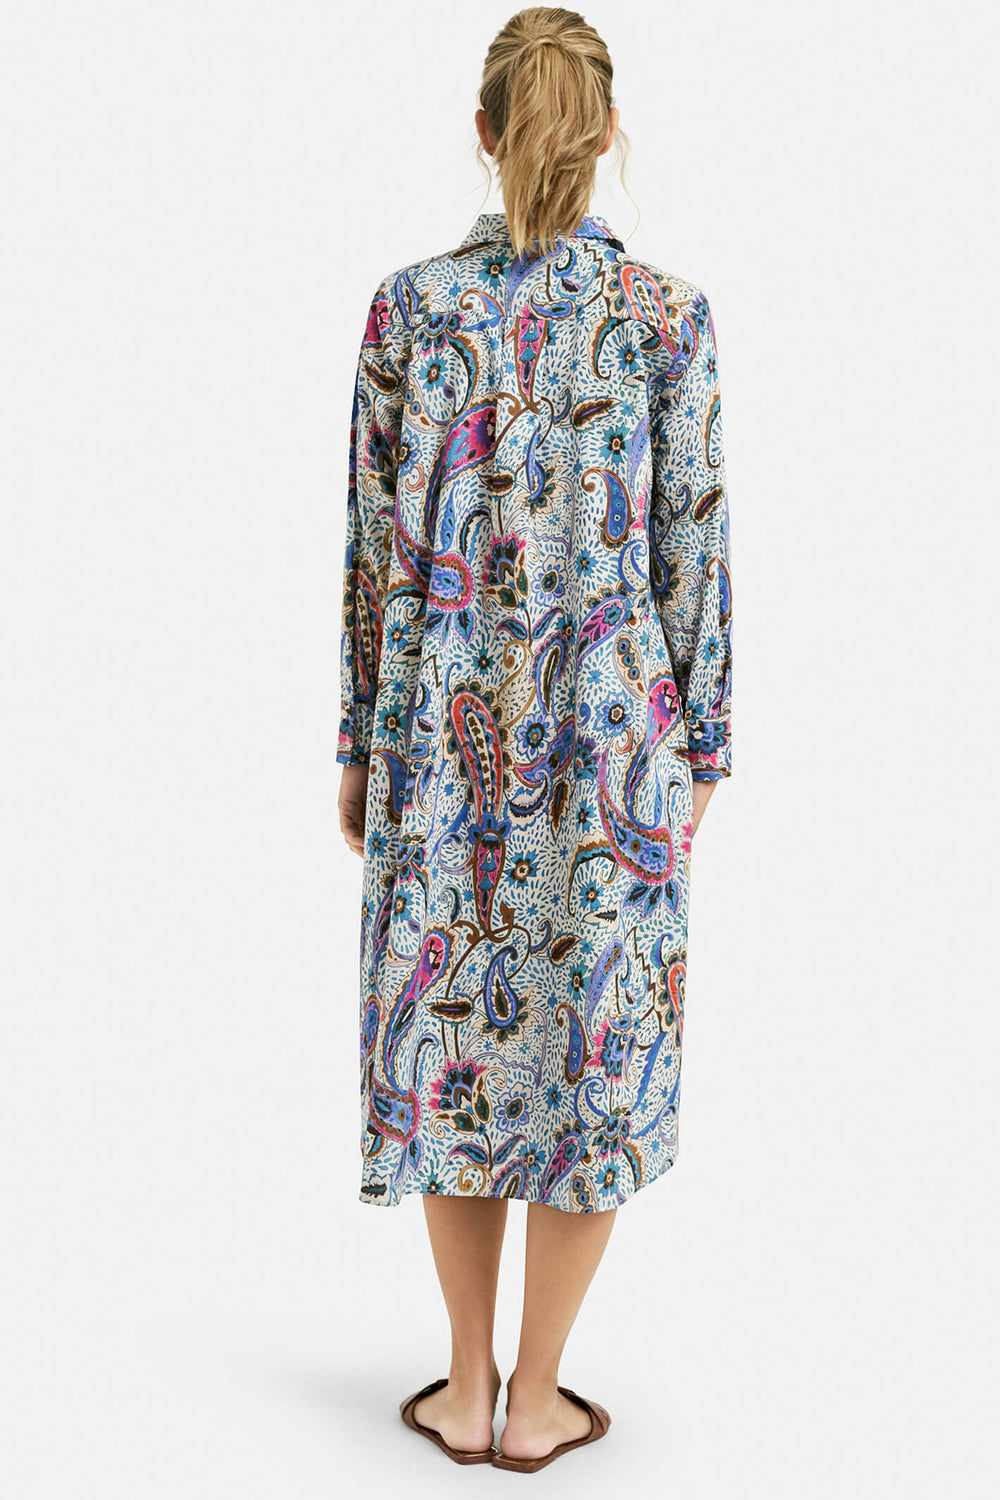 Milano 2130 Blue Floral Paisley Print Shirt Dress - Experience Boutique